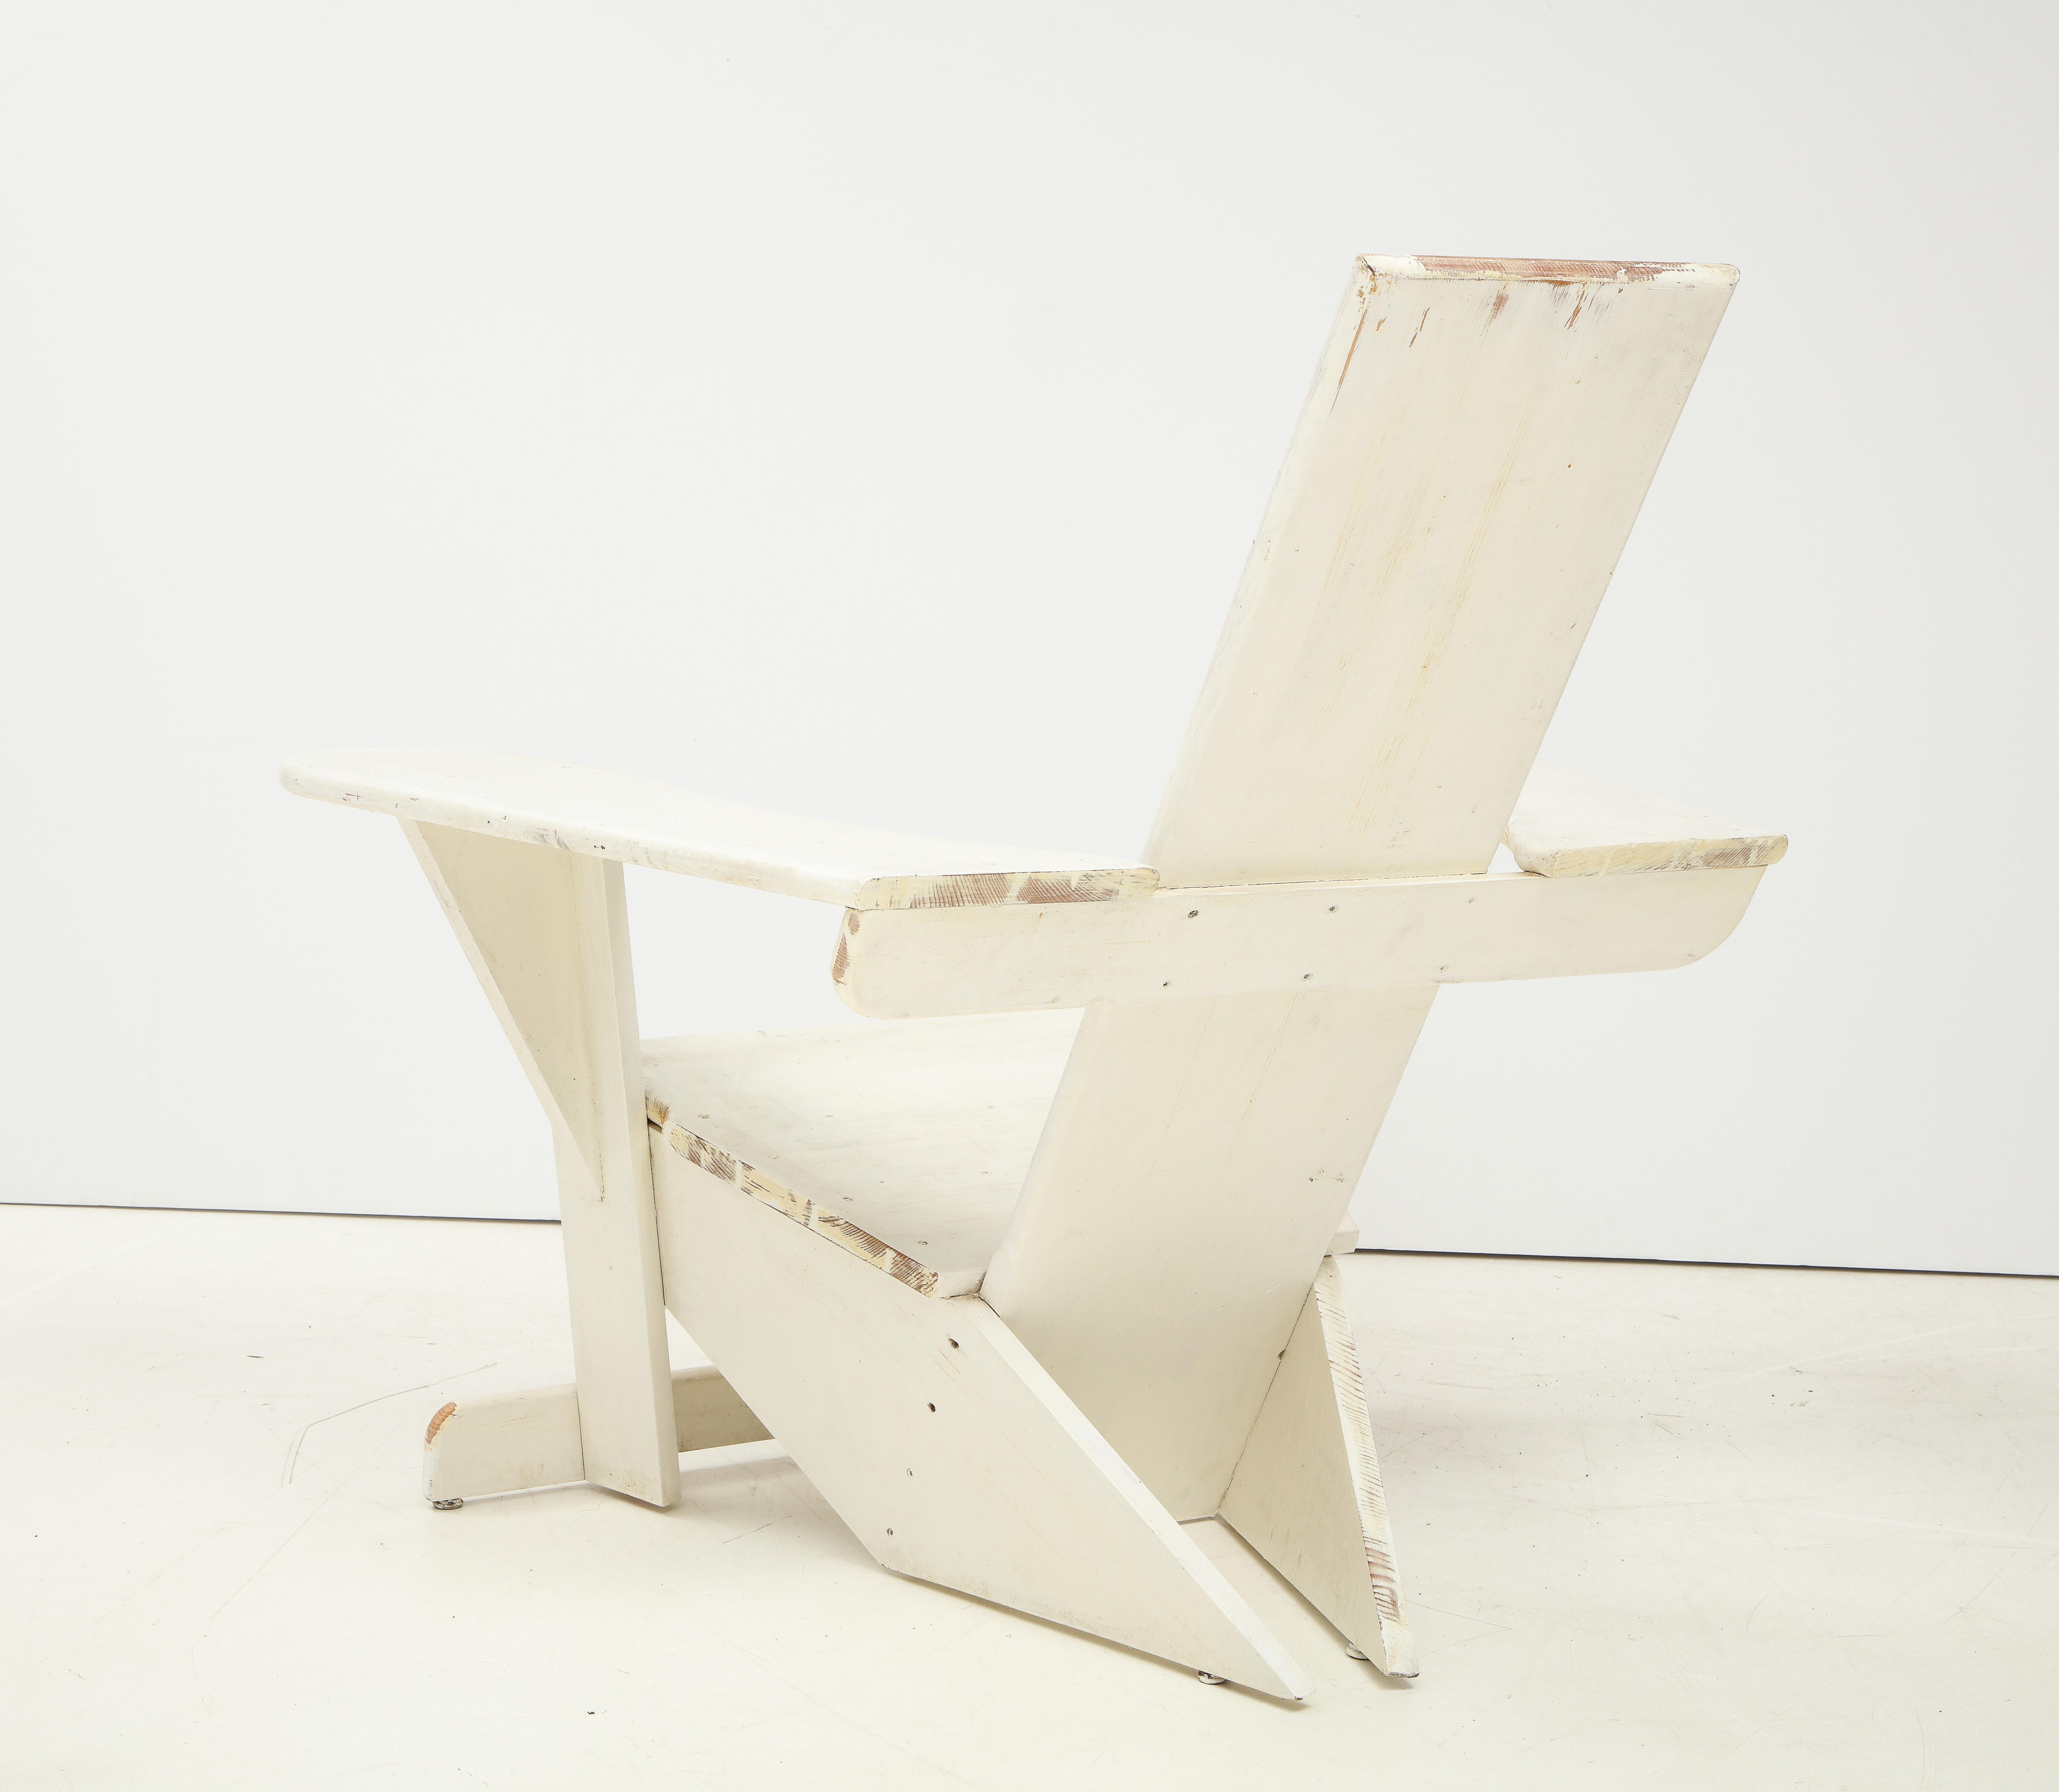 20th Century Pair of Chairs after Pierre Dariel, ‘Biarrtiz’ model, France, c. 1926